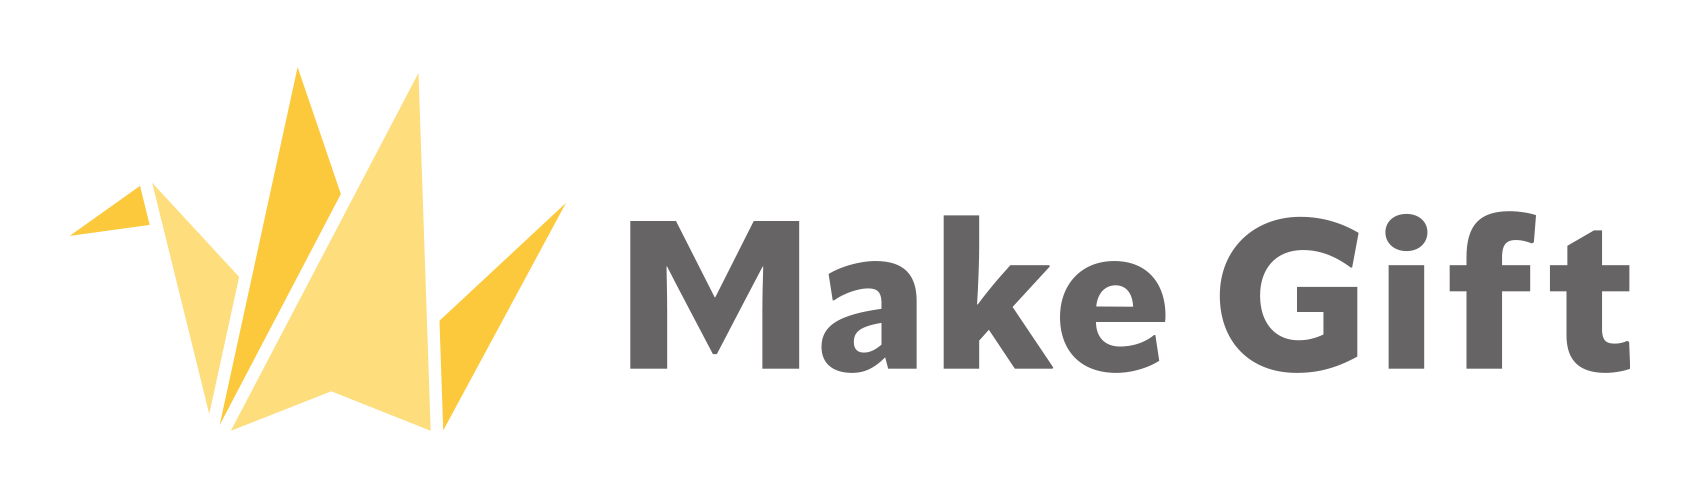 MakeGiftロゴ